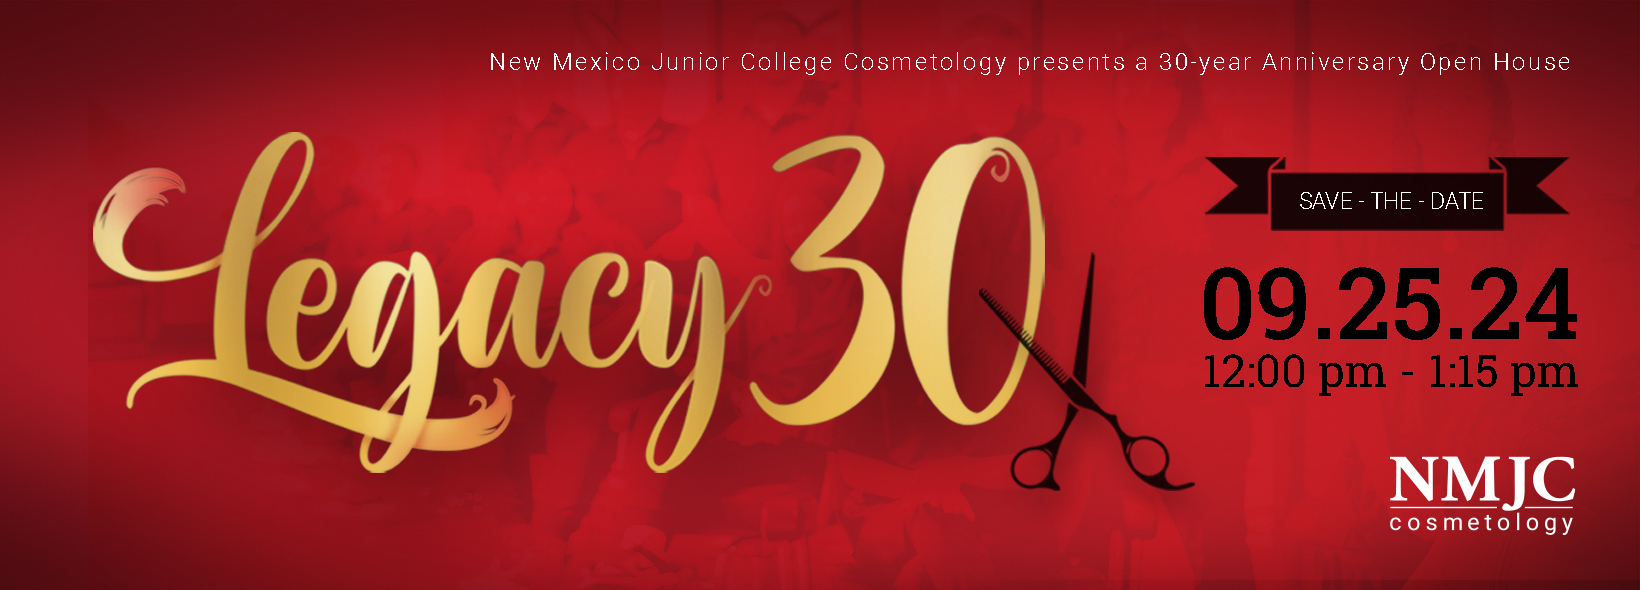 Cosmetology 30-year anniversary